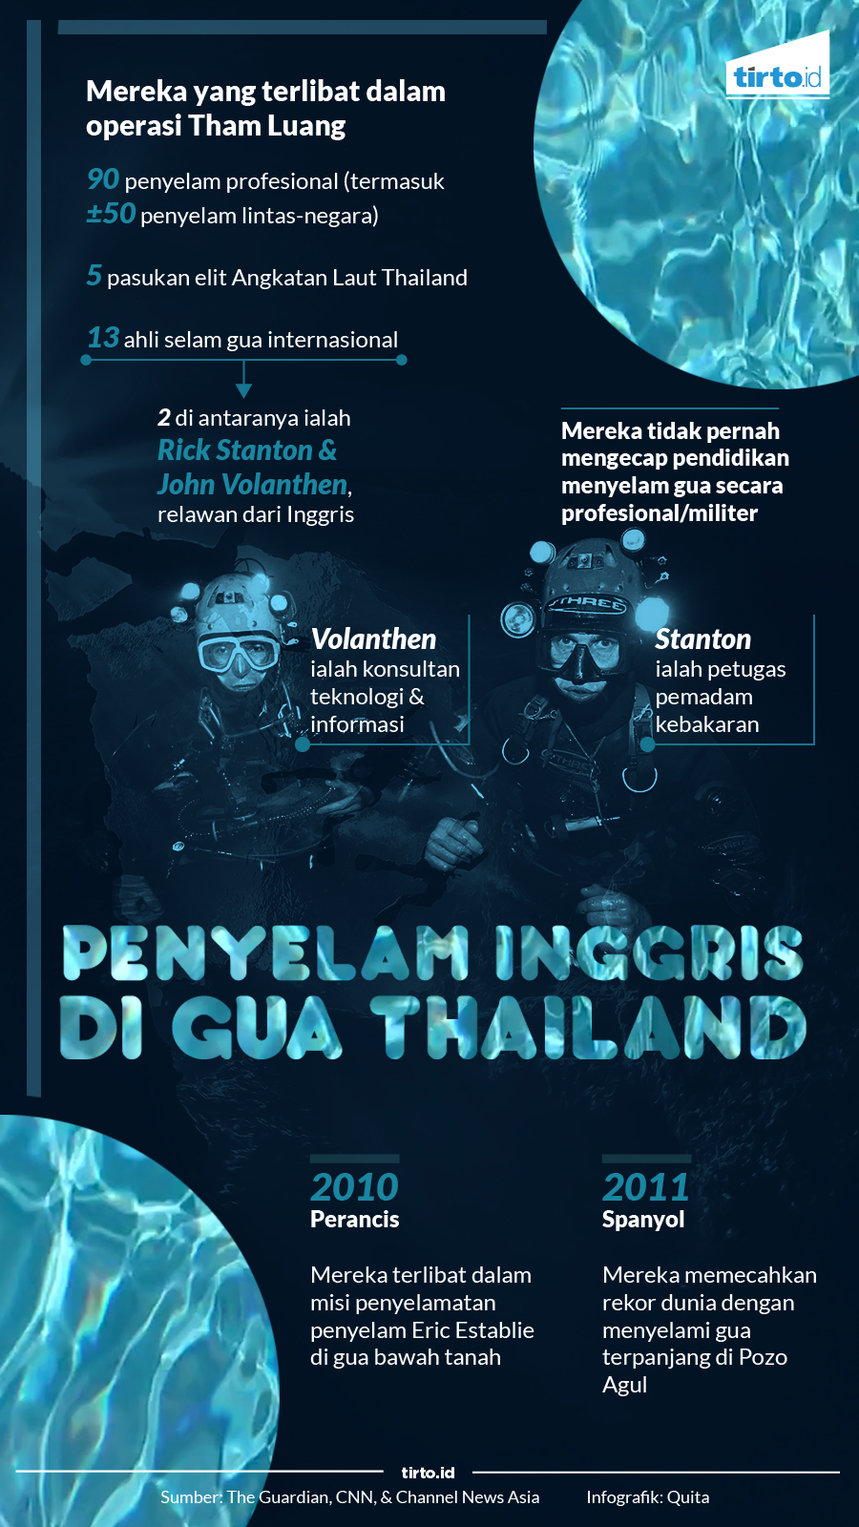 Infografik Penyelam Inggris di gua thailand